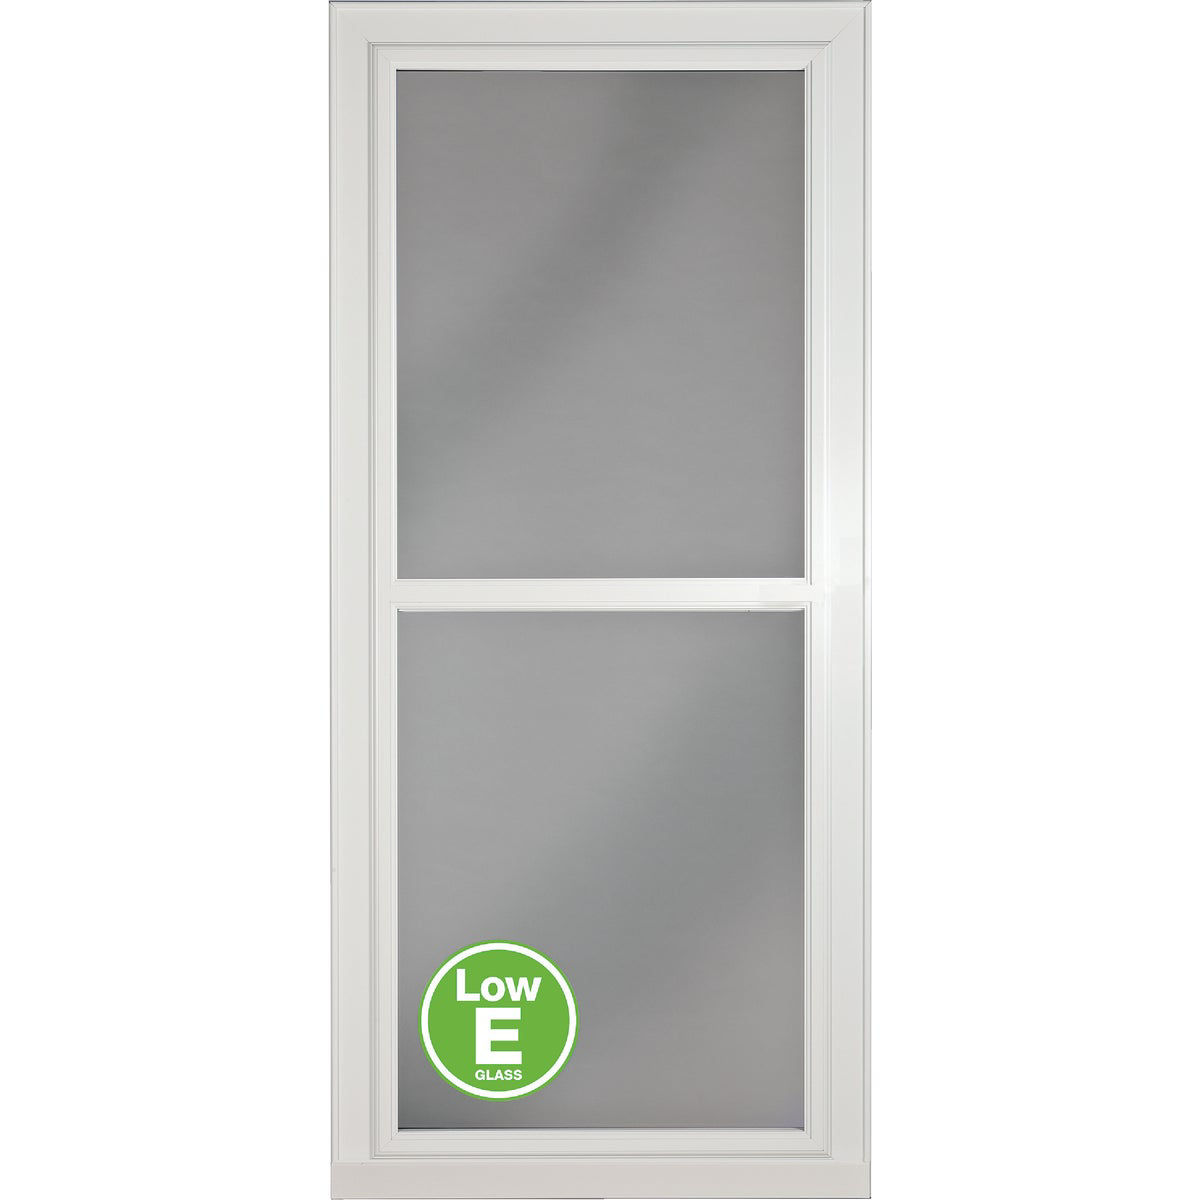 Door and Window Track Cleaning Brush Tool, Handheld Gutter Gaps,  Desktop/Glass/Sliding Door/Tile line/Blinds/car Vents/air  Conditioning/Keyboard Tool